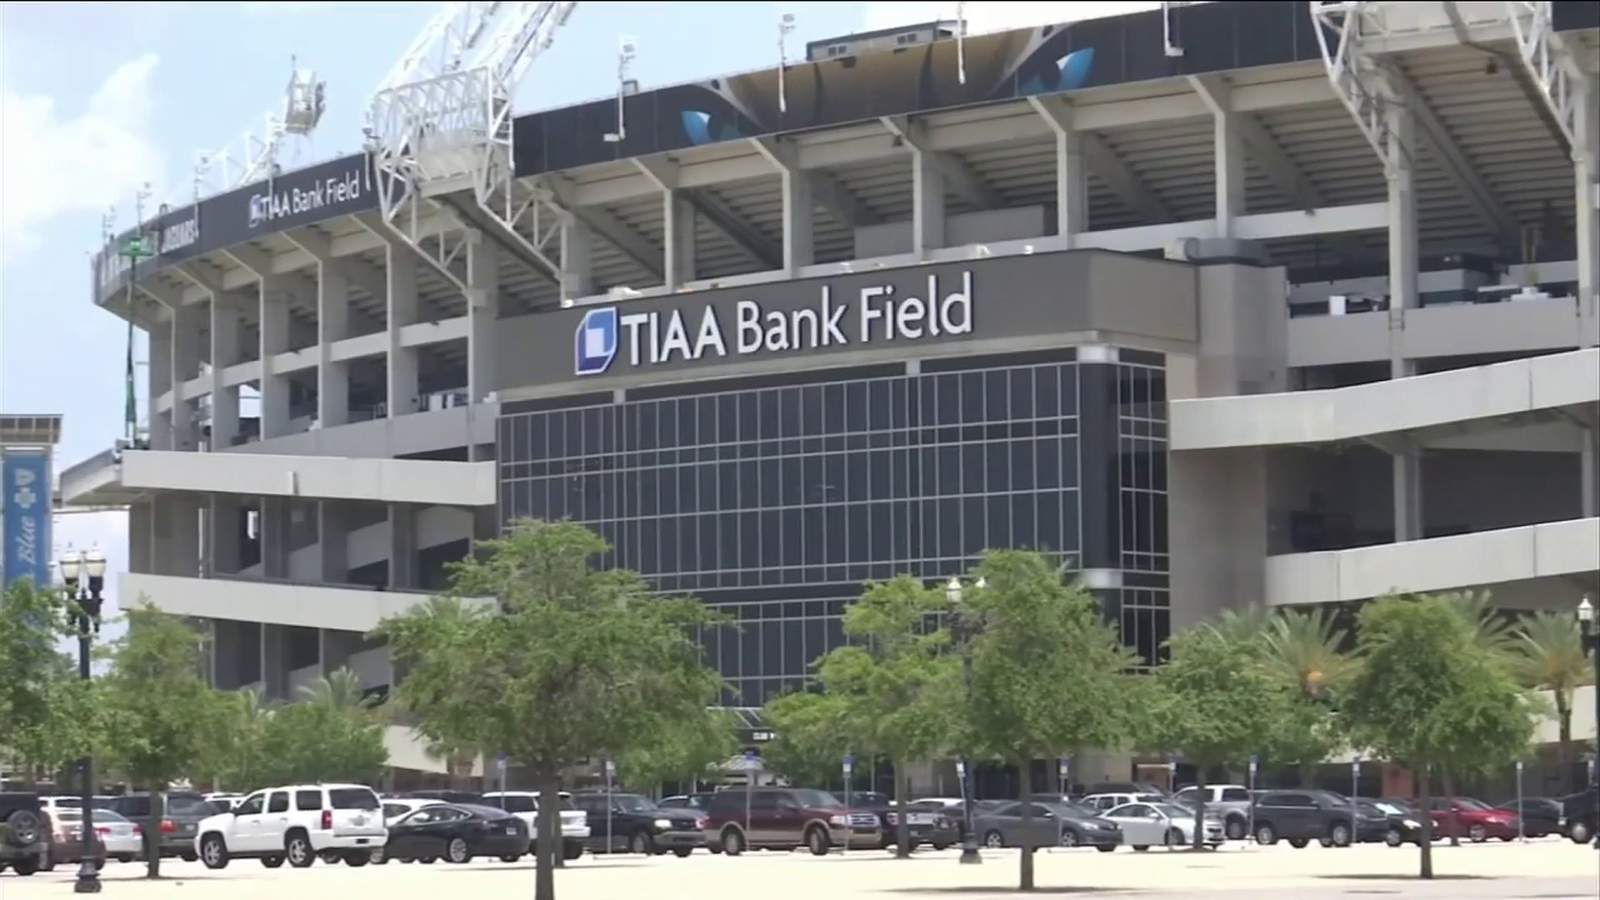 Report: Republicans exploring holding RNC in Jacksonville outdoor stadium